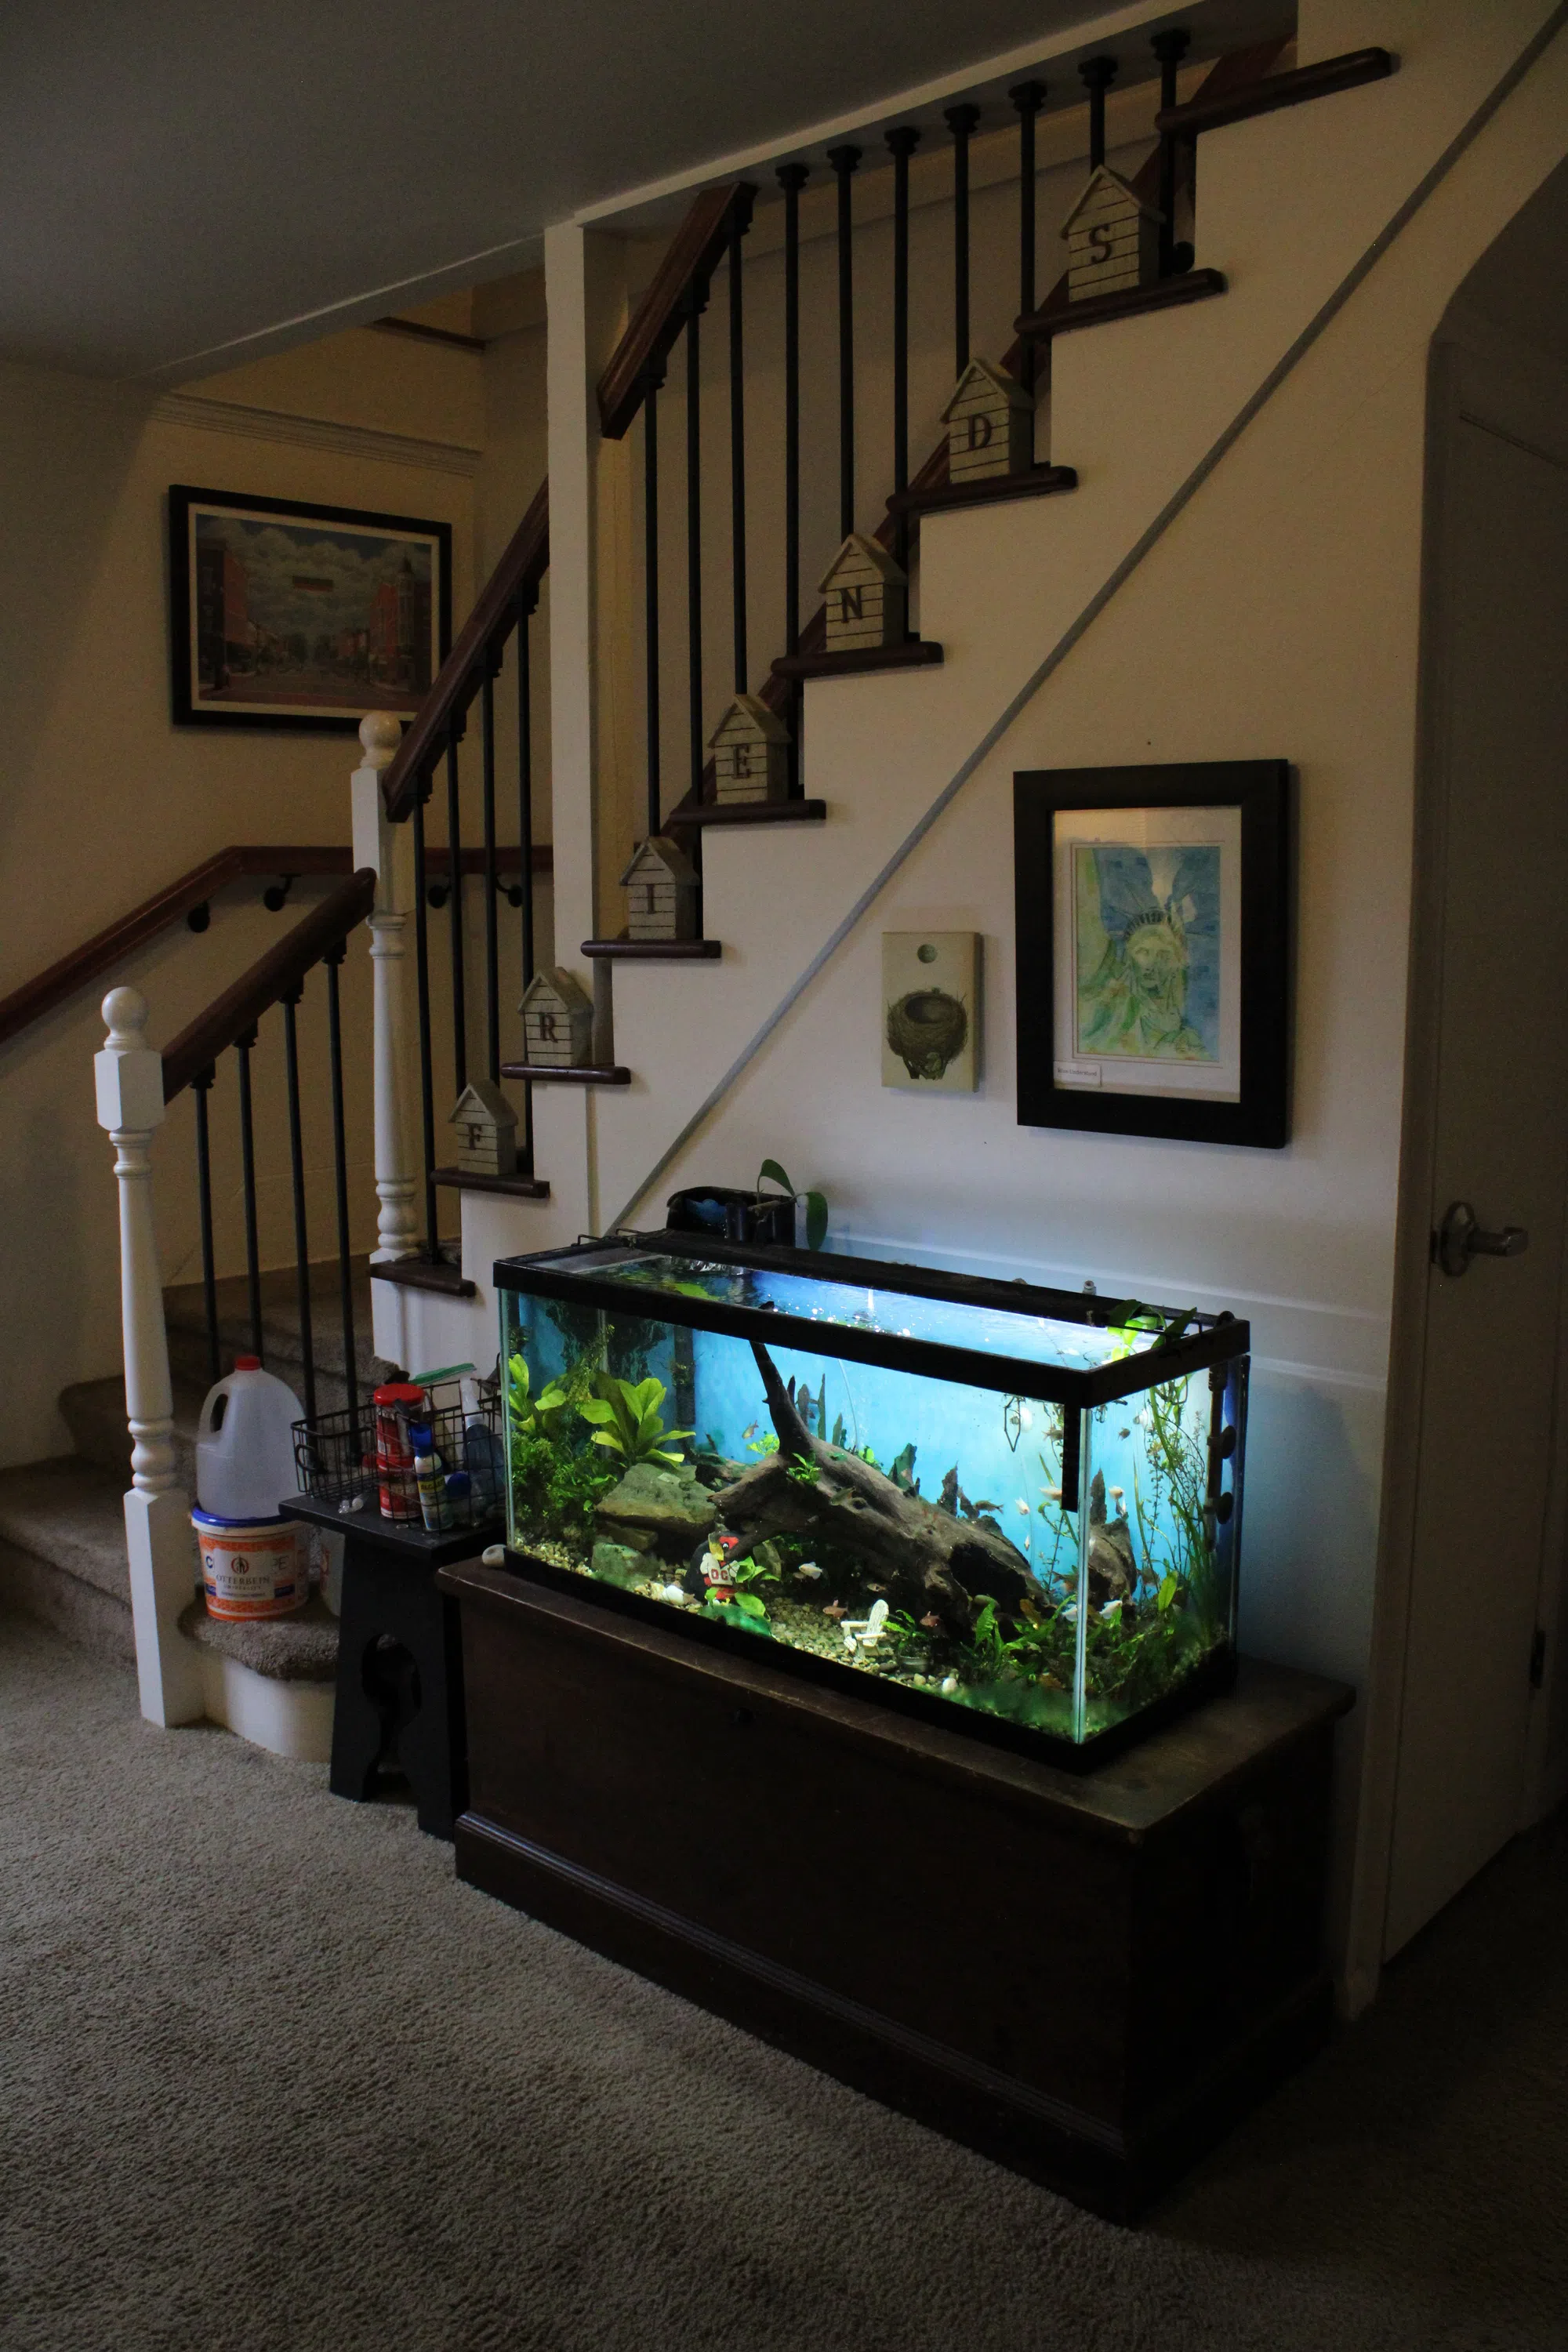 Staircase with an illuminated fishtank. Photos on the walls.